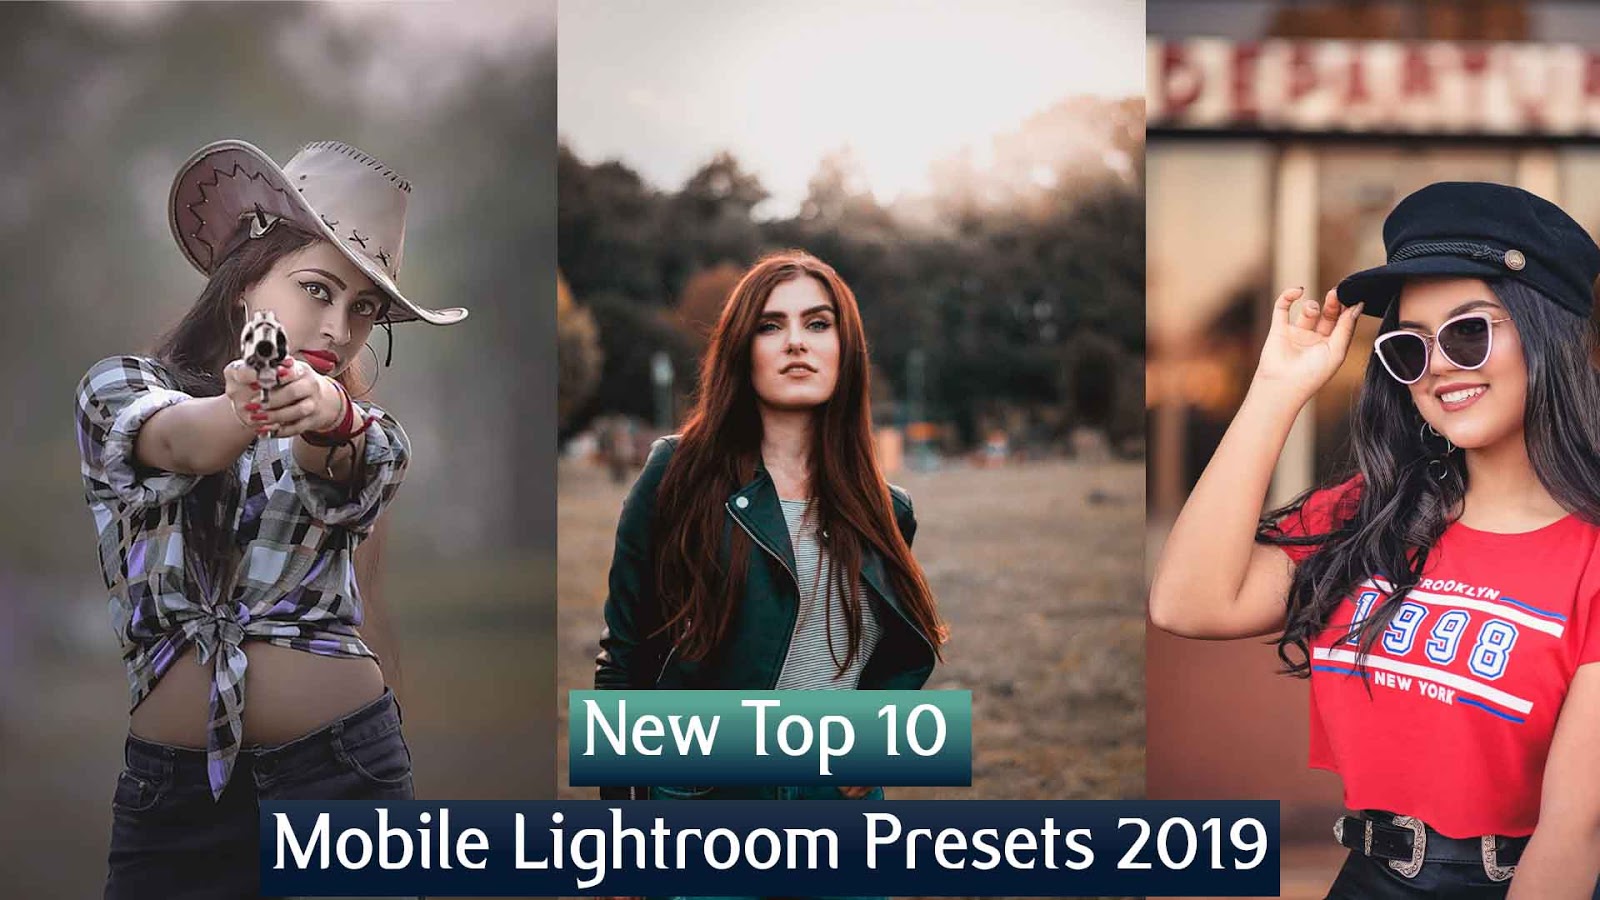 New Top 10 Mobile Lightroom Presets 2019 Free Download